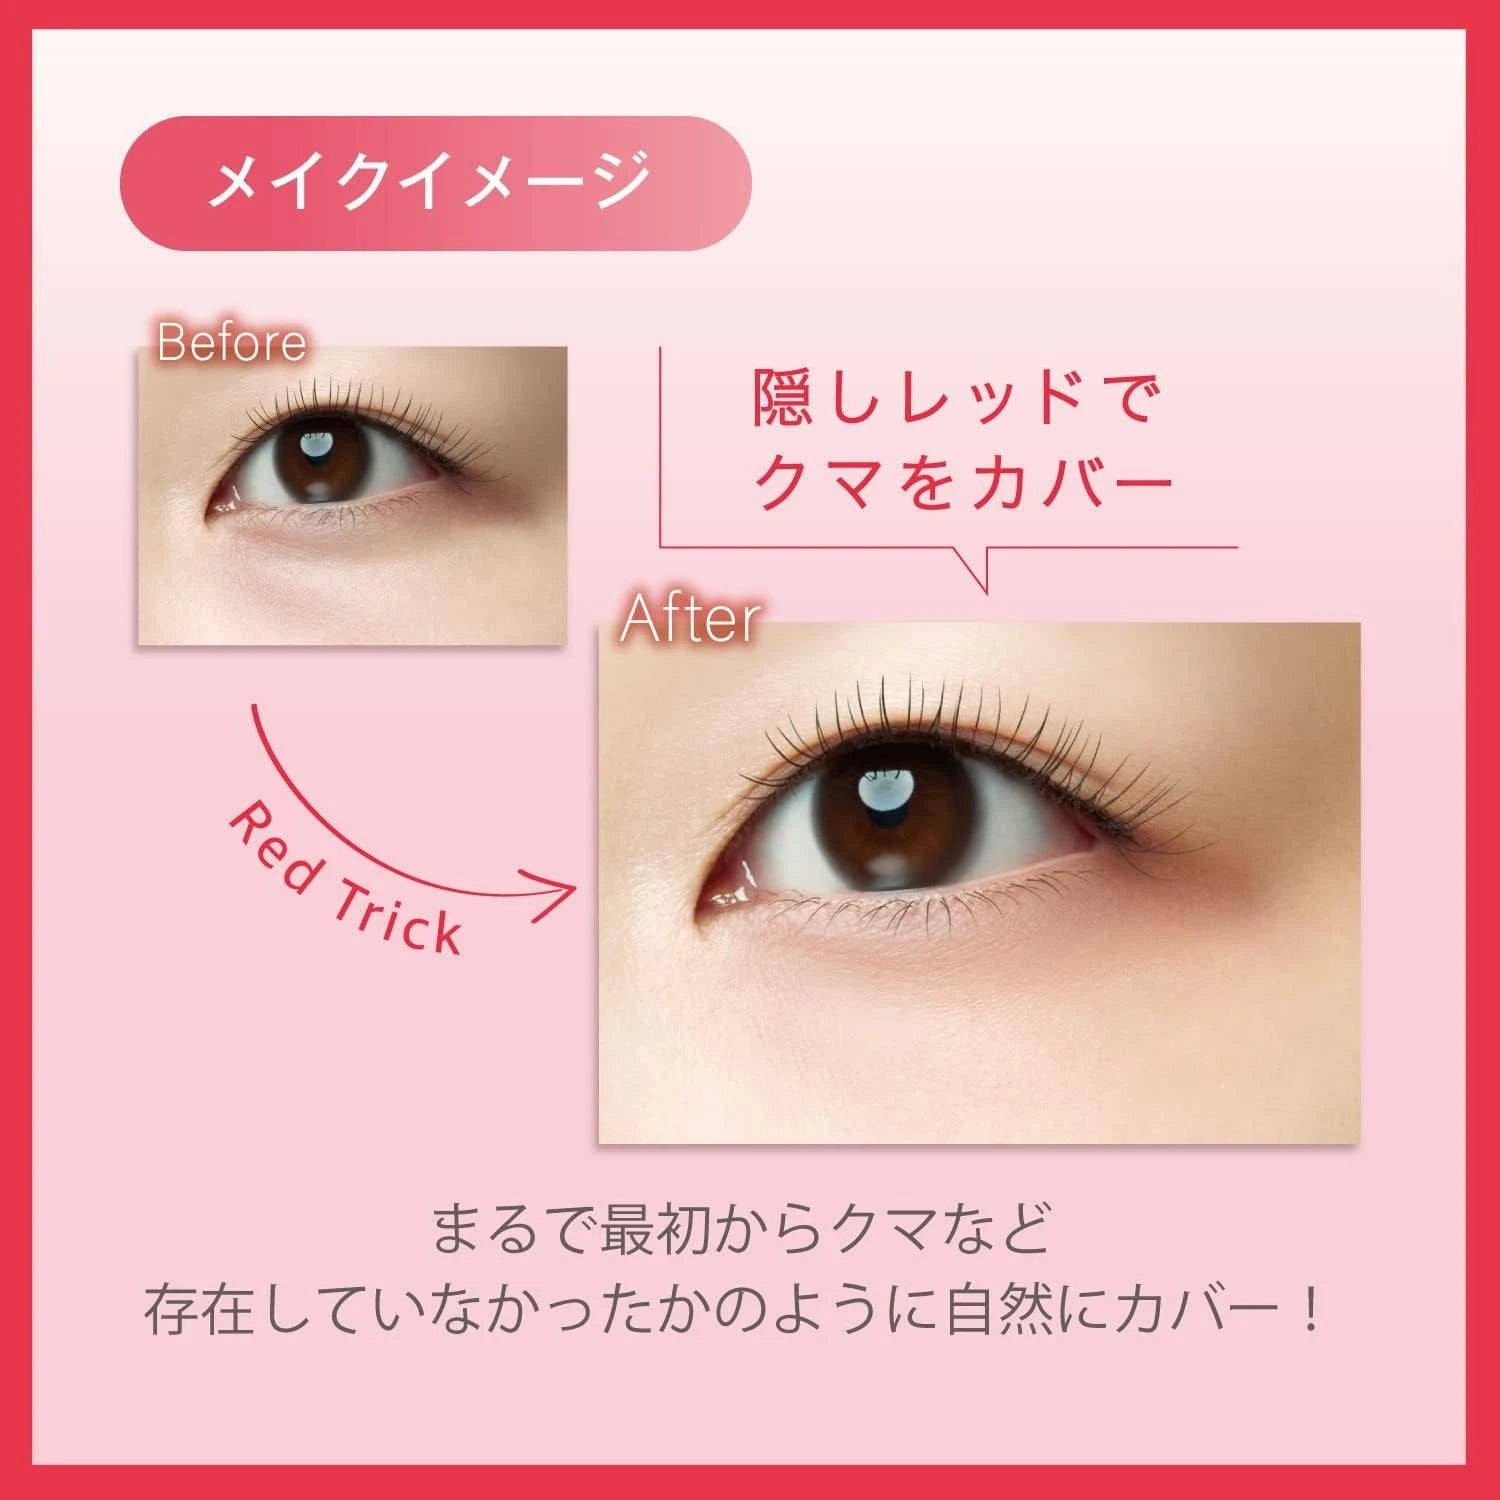 Kose Visee Red Trick Eye Concealer 1.7g